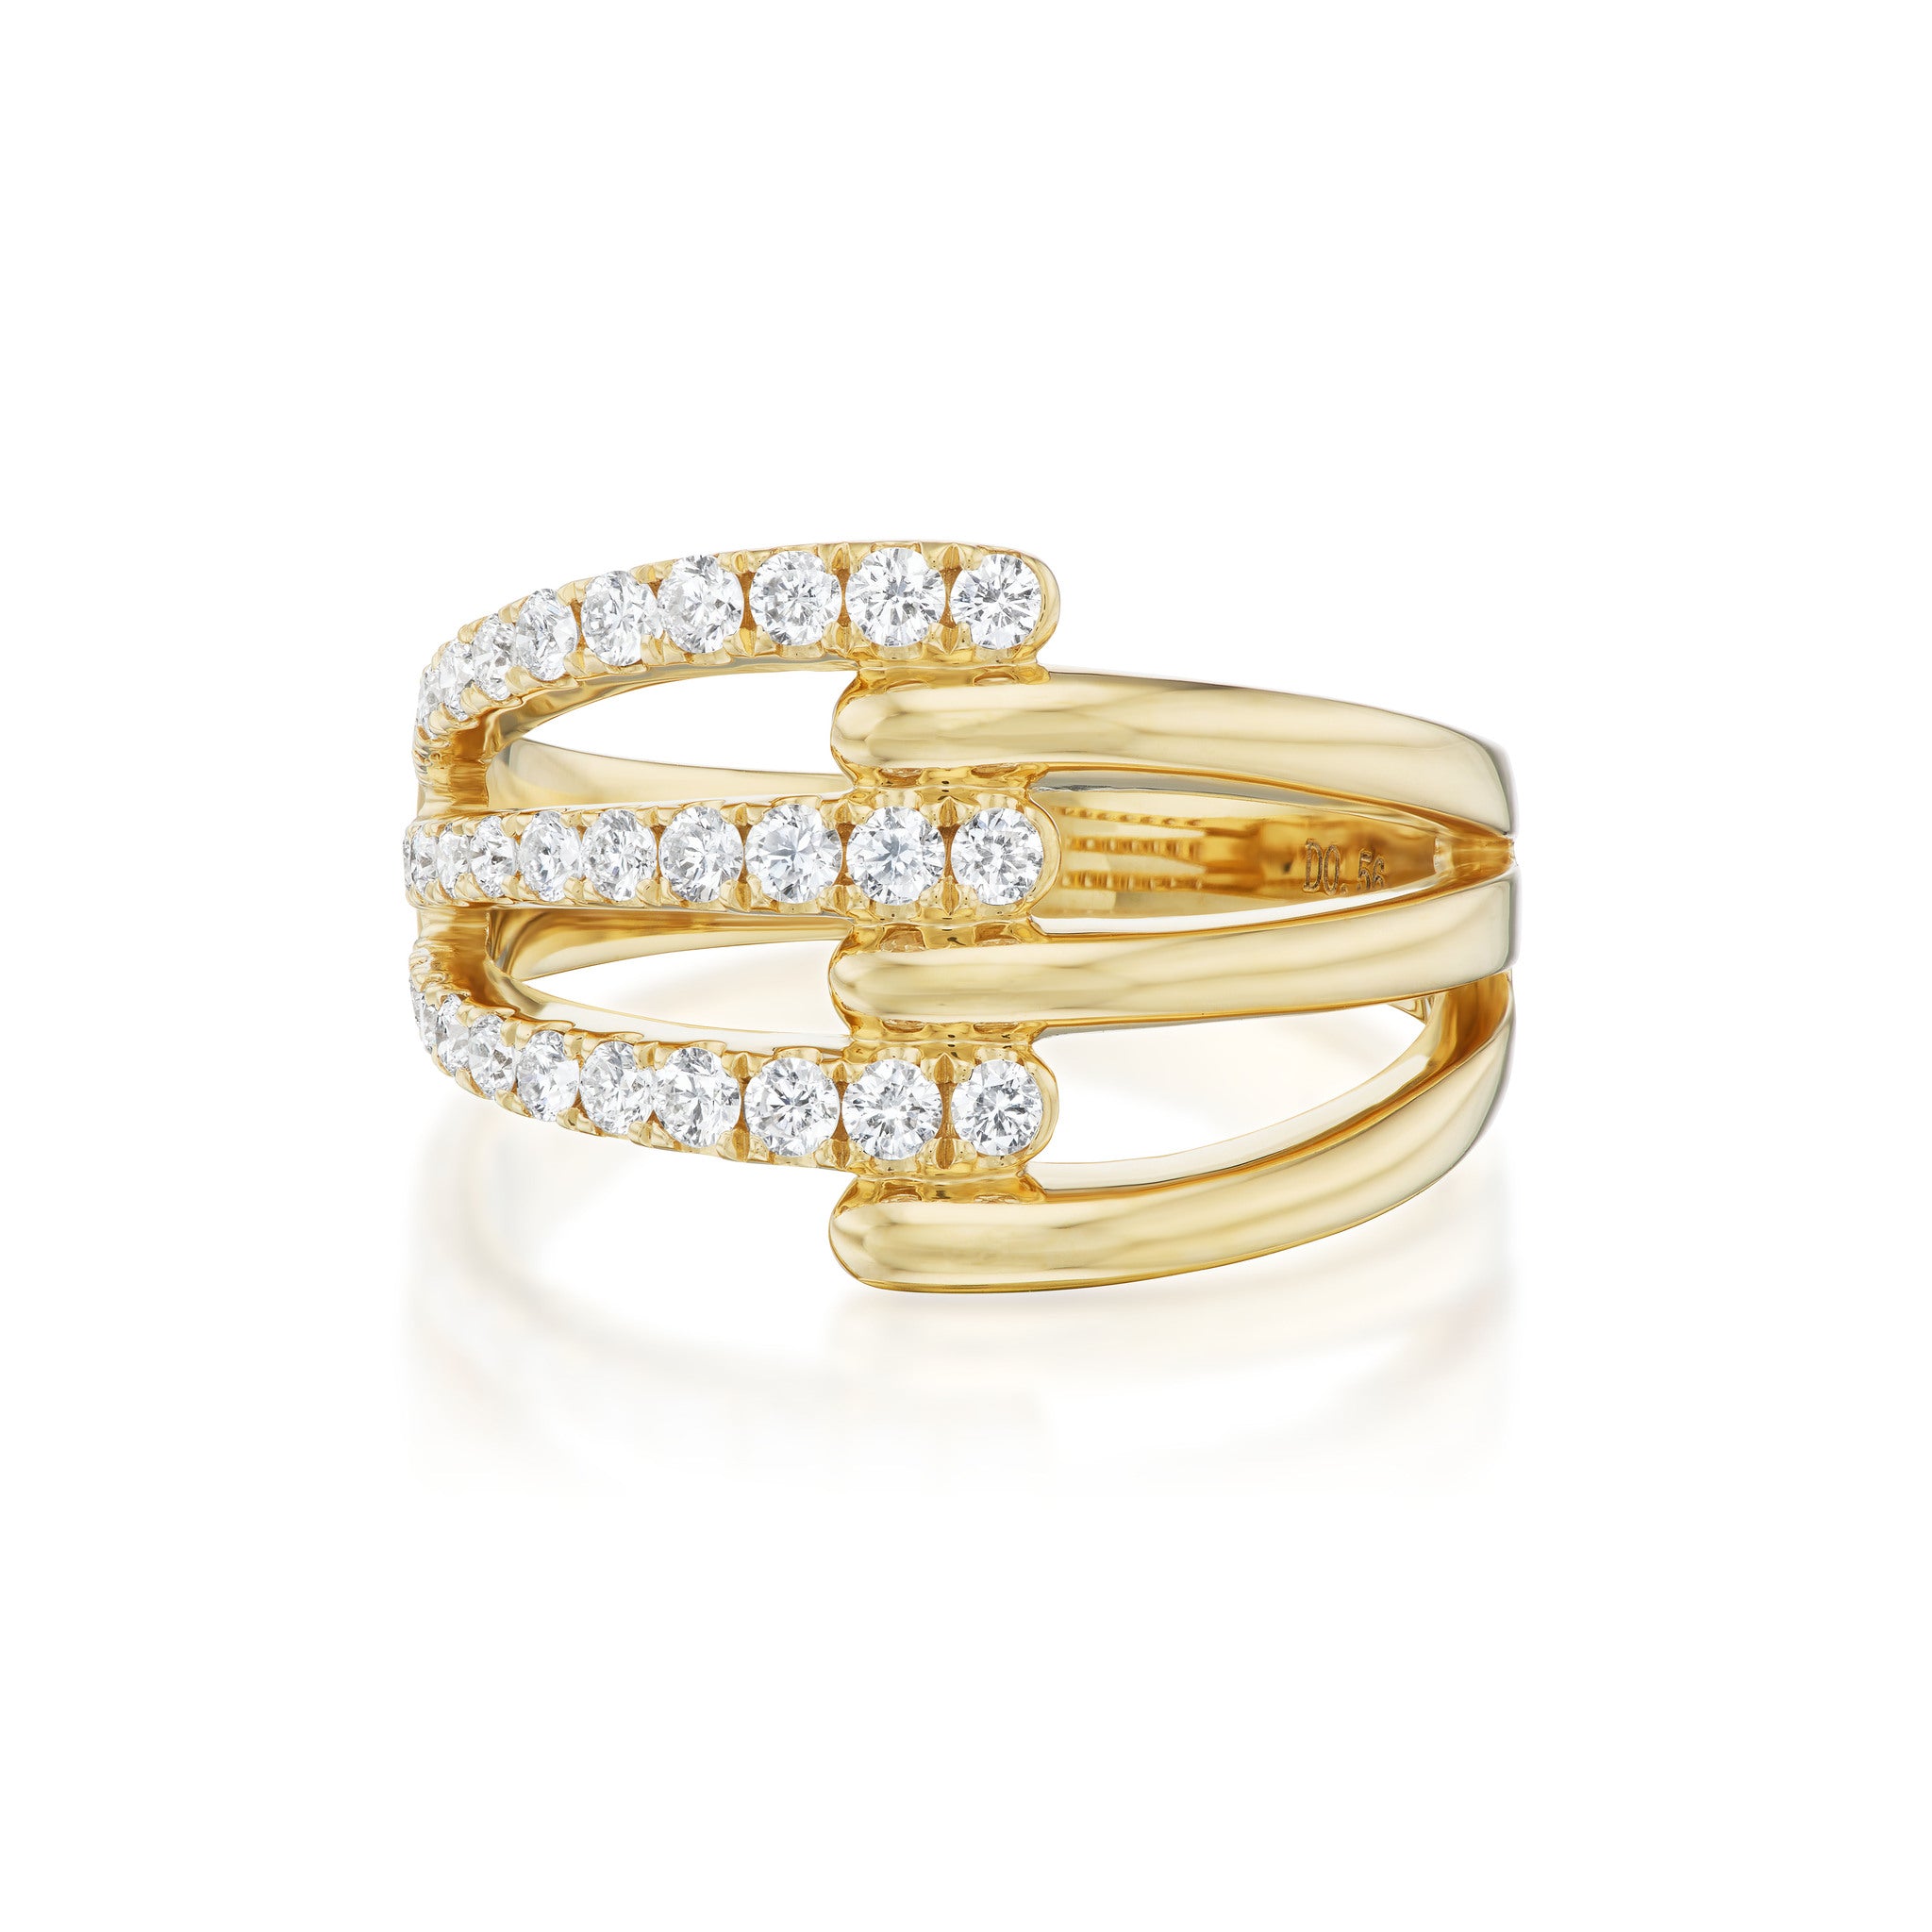 The Alyssa Gold and Diamond Ring